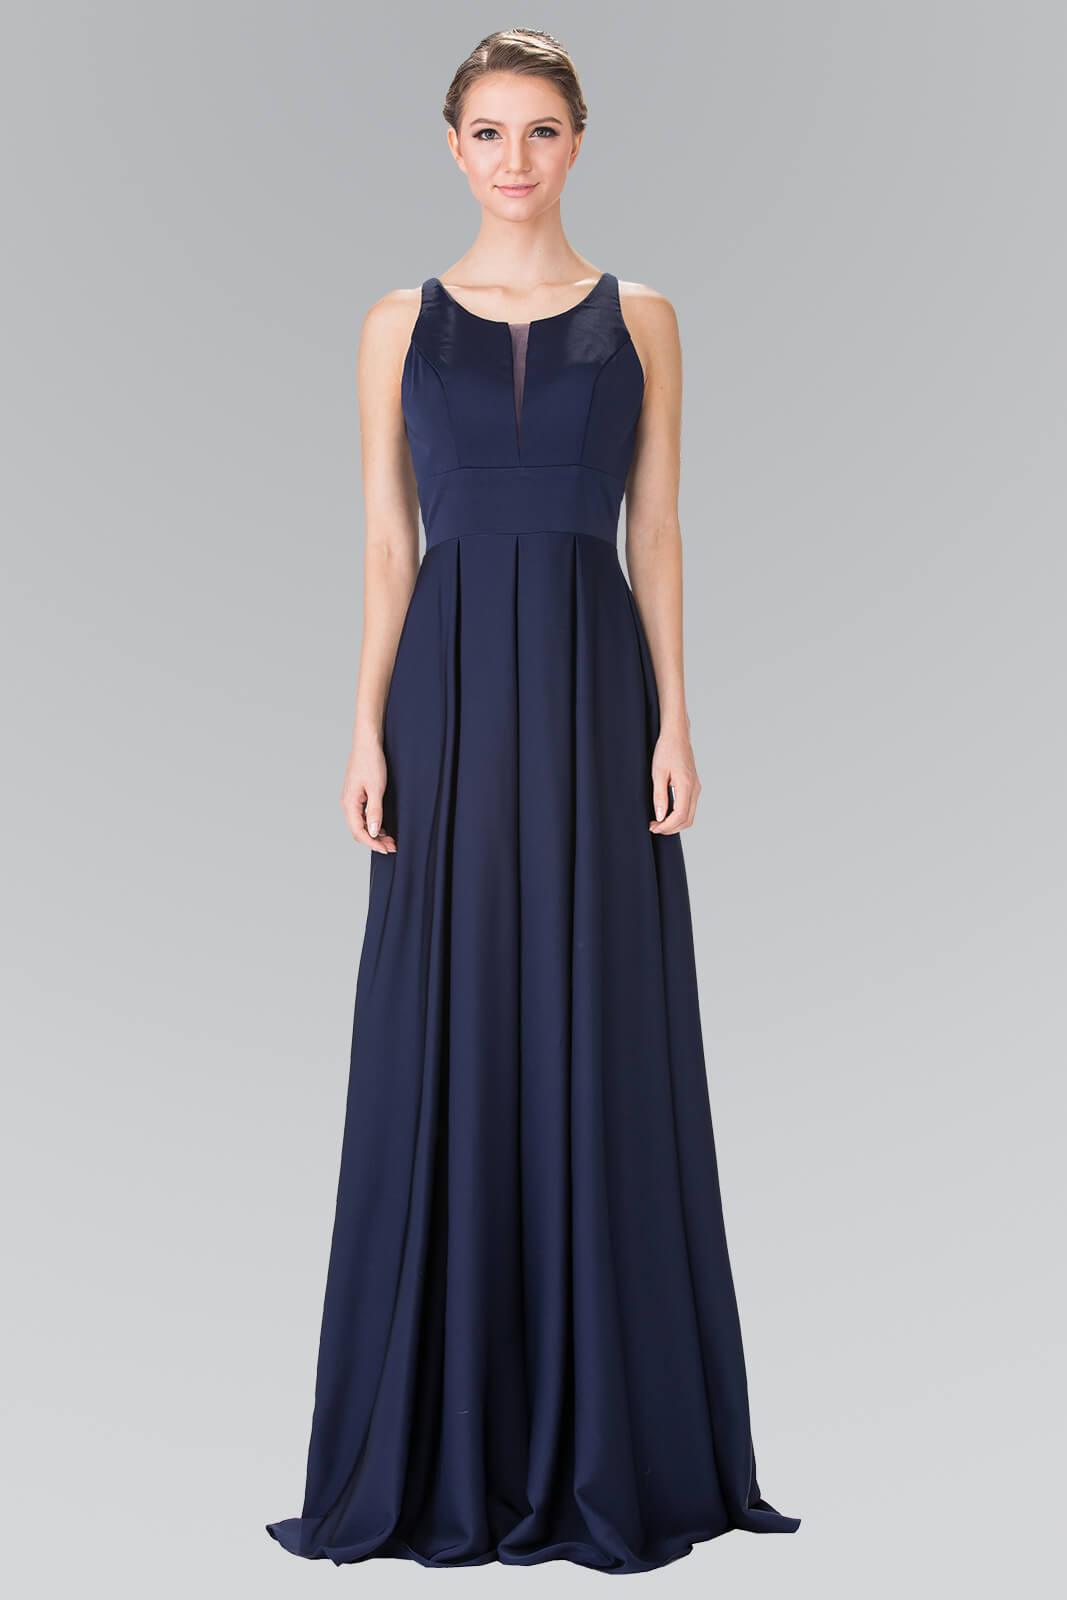 Prom Long Bridesmaid Dress Formal with Pockets - The Dress Outlet Elizabeth K